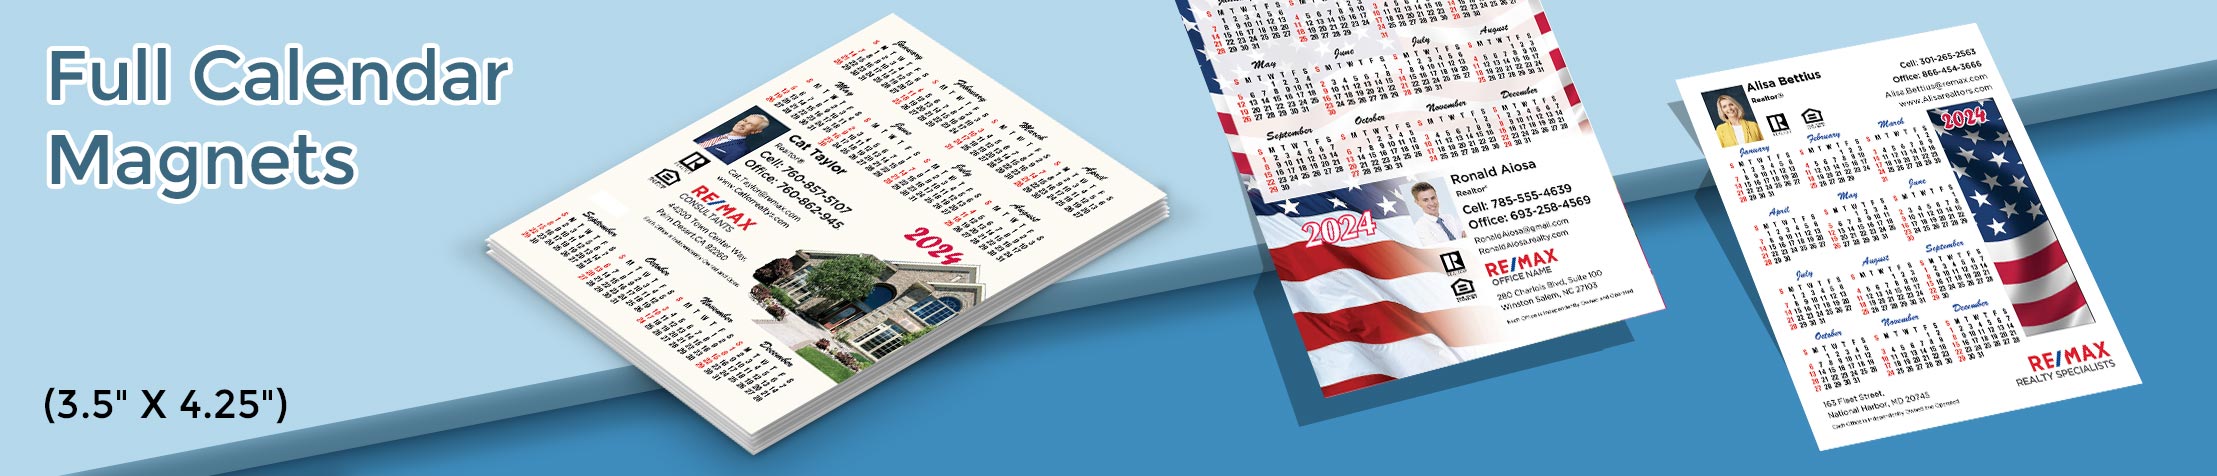 RE/MAX Real Estate Full Calendar Magnets - RE/MAX 2019 calendars, 3.5” by 4.25” | BestPrintBuy.com